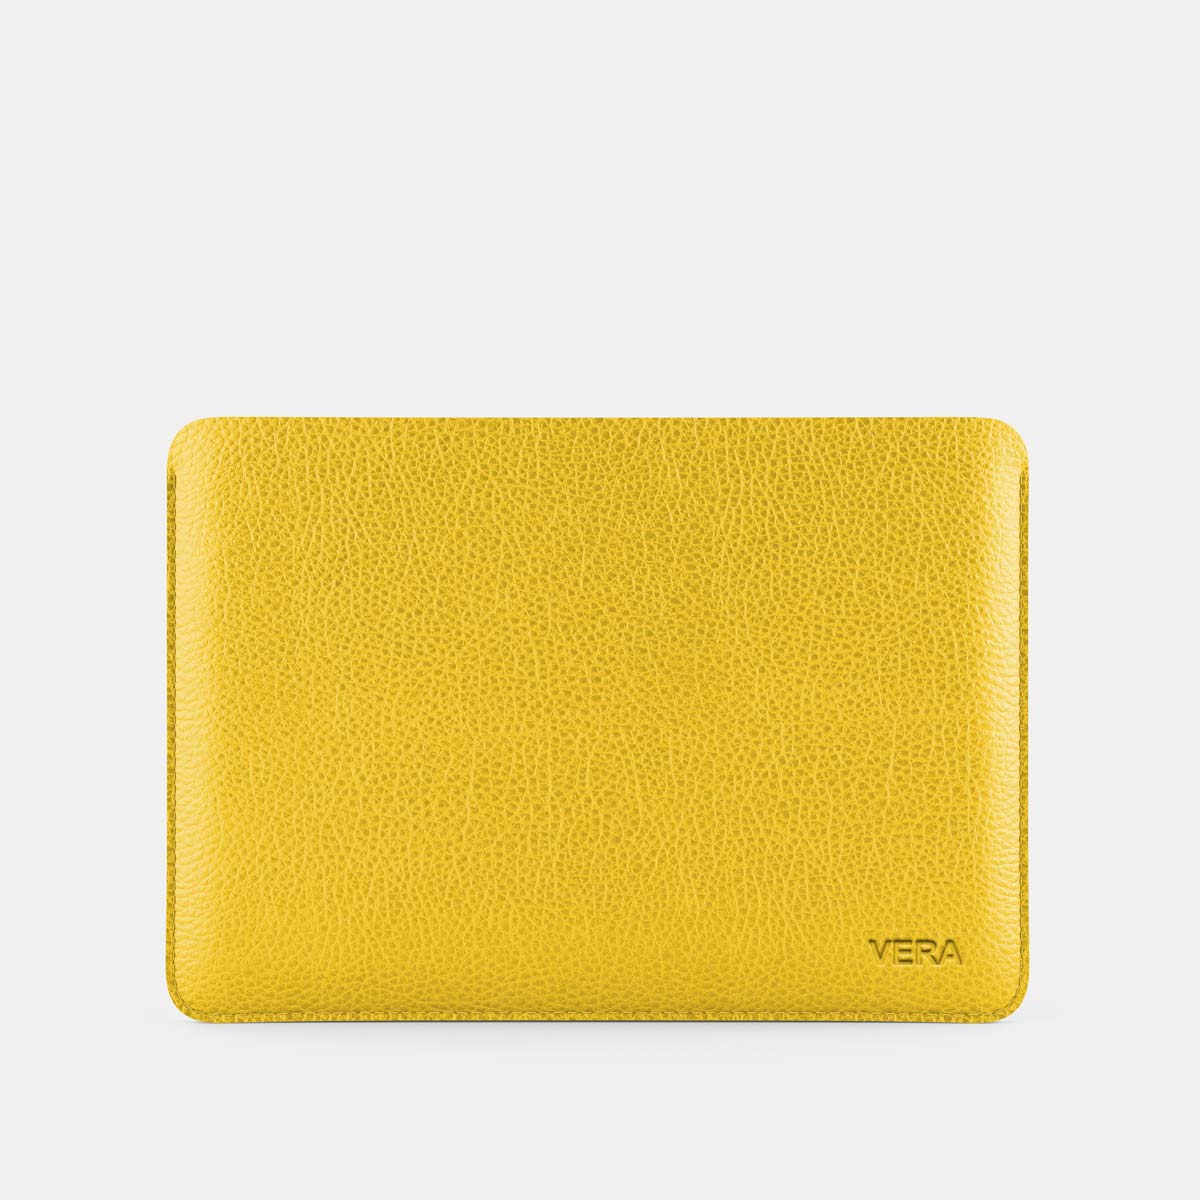 Leather iPad Sleeve - Yellow and Grey